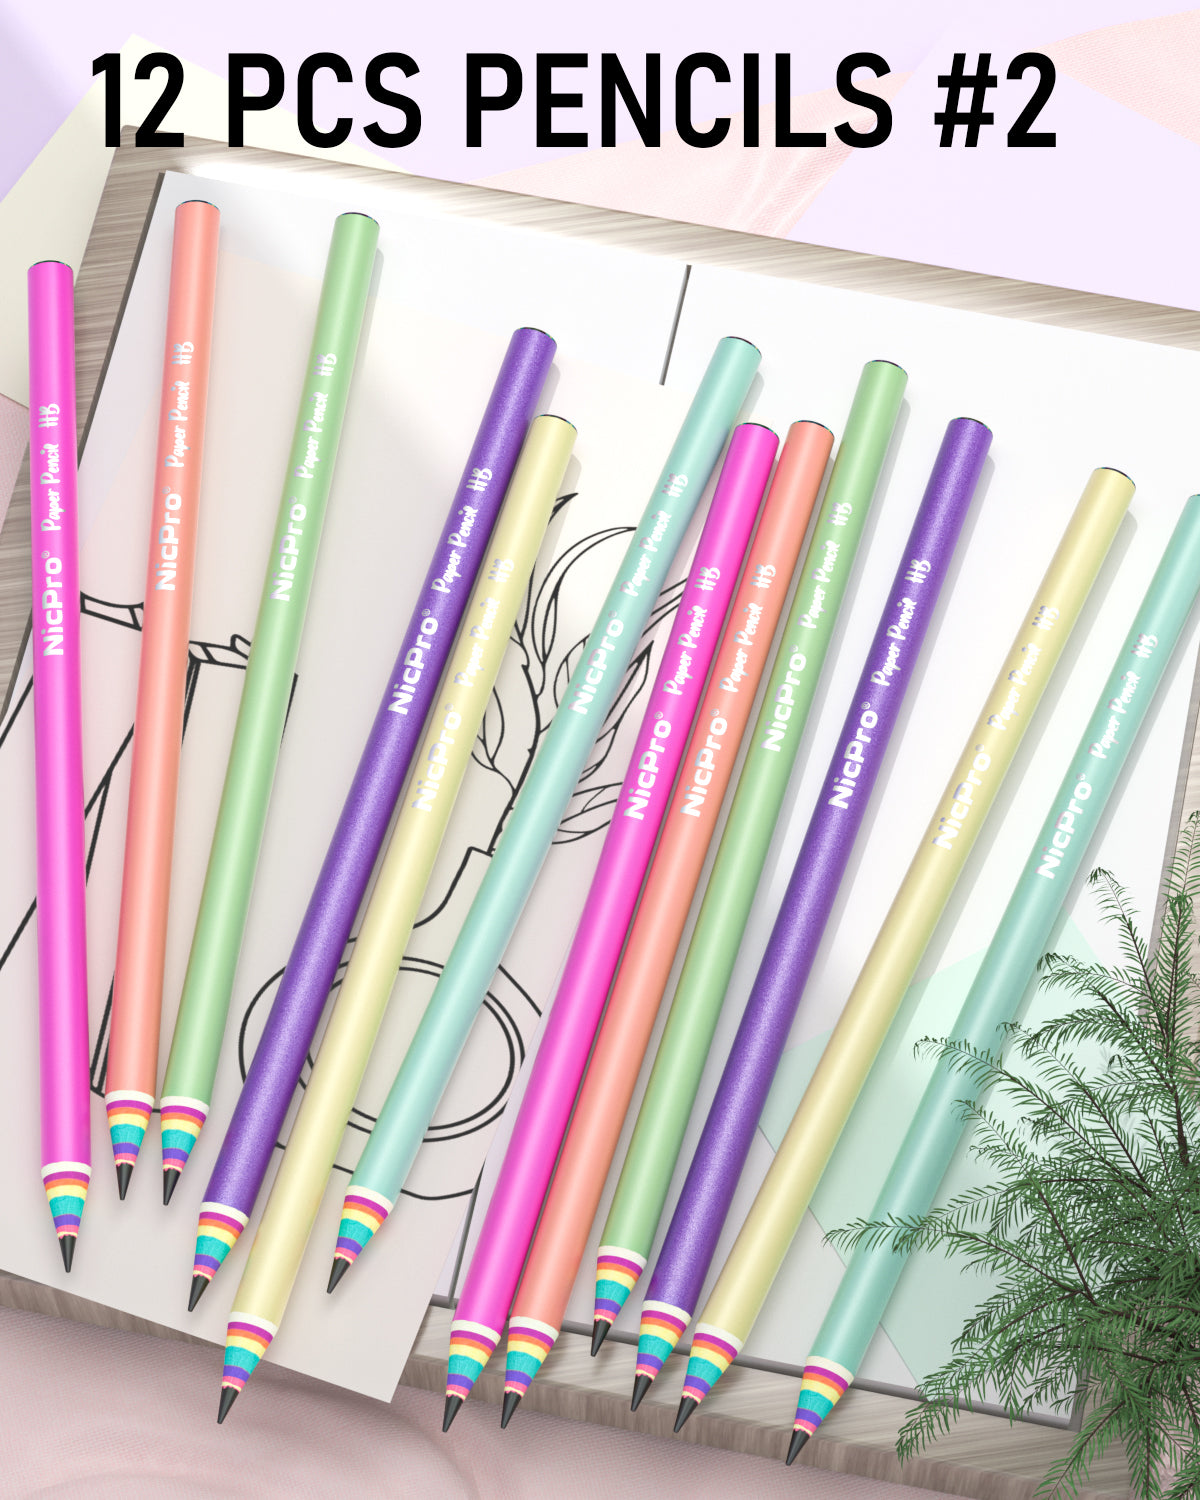 Nicpro 12PCS Rainbow Pencils HB #2, Cute Pastel Pencils Pre-Sharpened Wooden Pencils, Break-Resistant & Eco-friendly School Pencil For Kids, Girls Drawing Writing Sketching, Black HB Lead